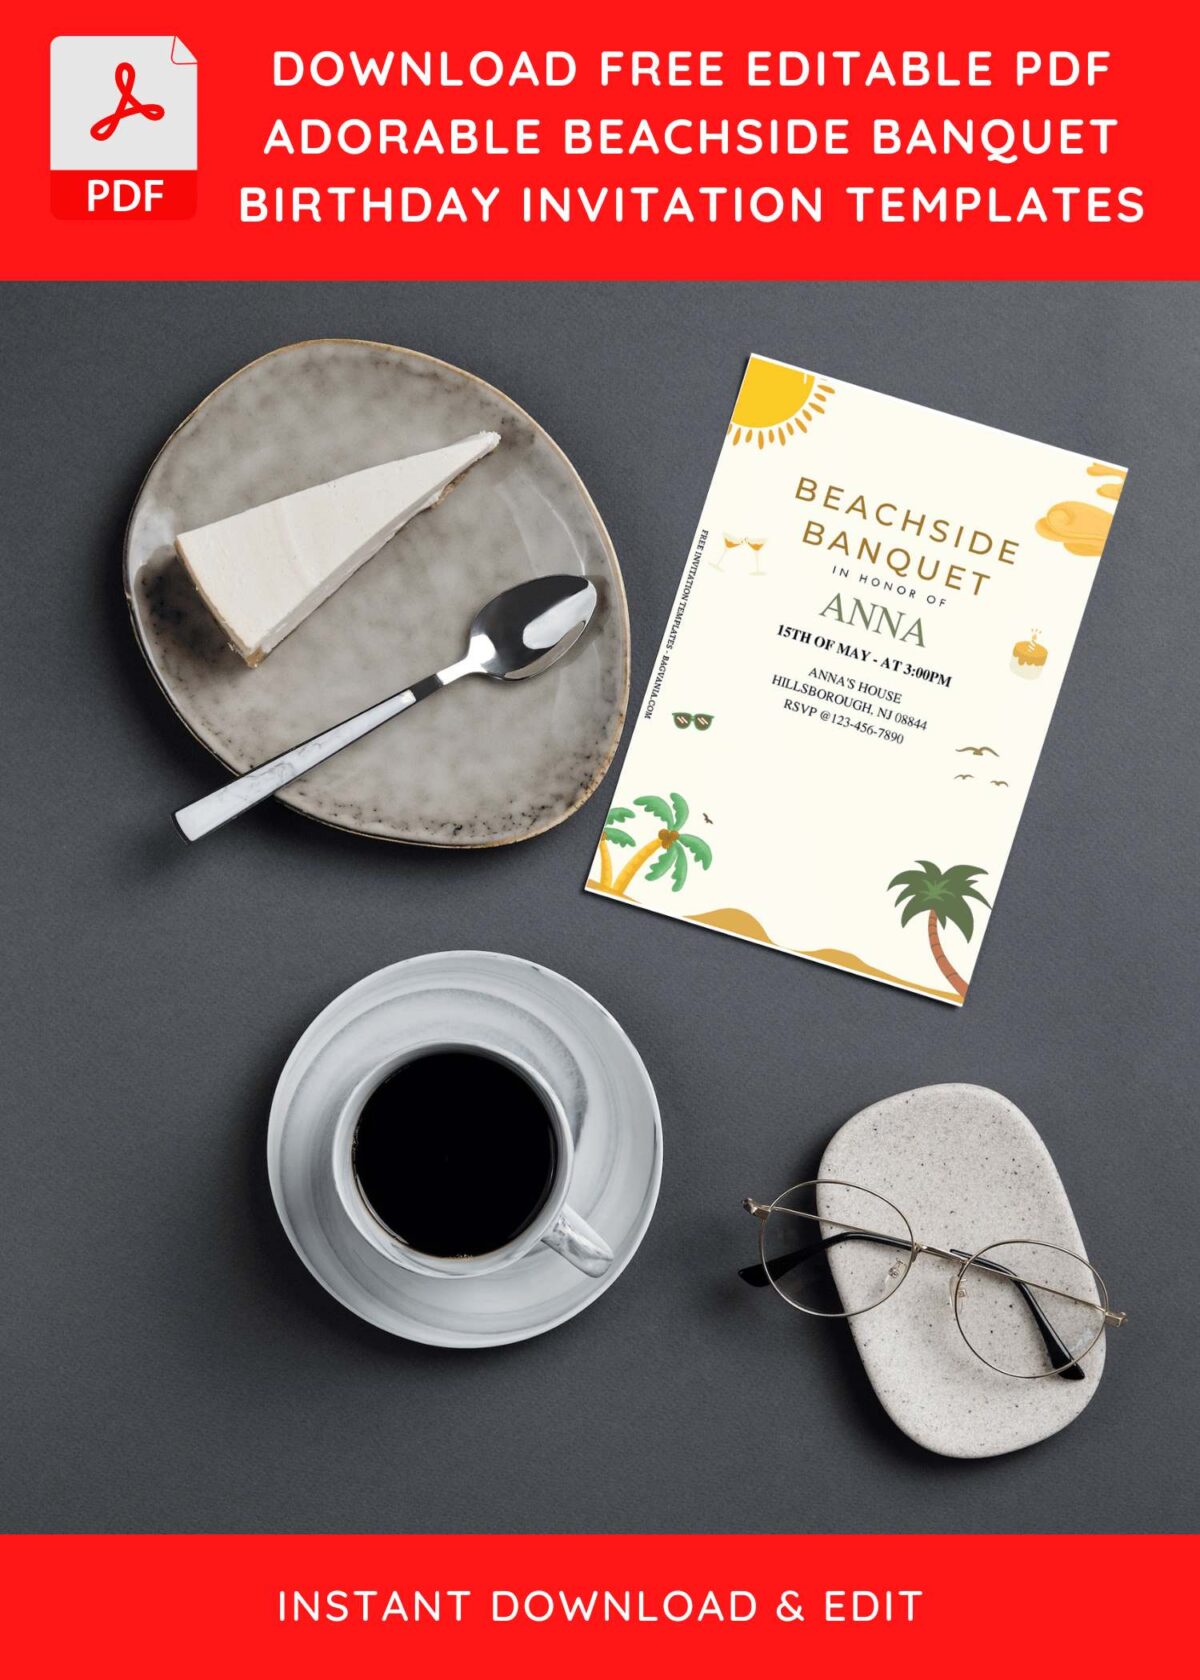 (Free Editable PDF) Summer Beachside Banquet Birthday Invitation Templates G